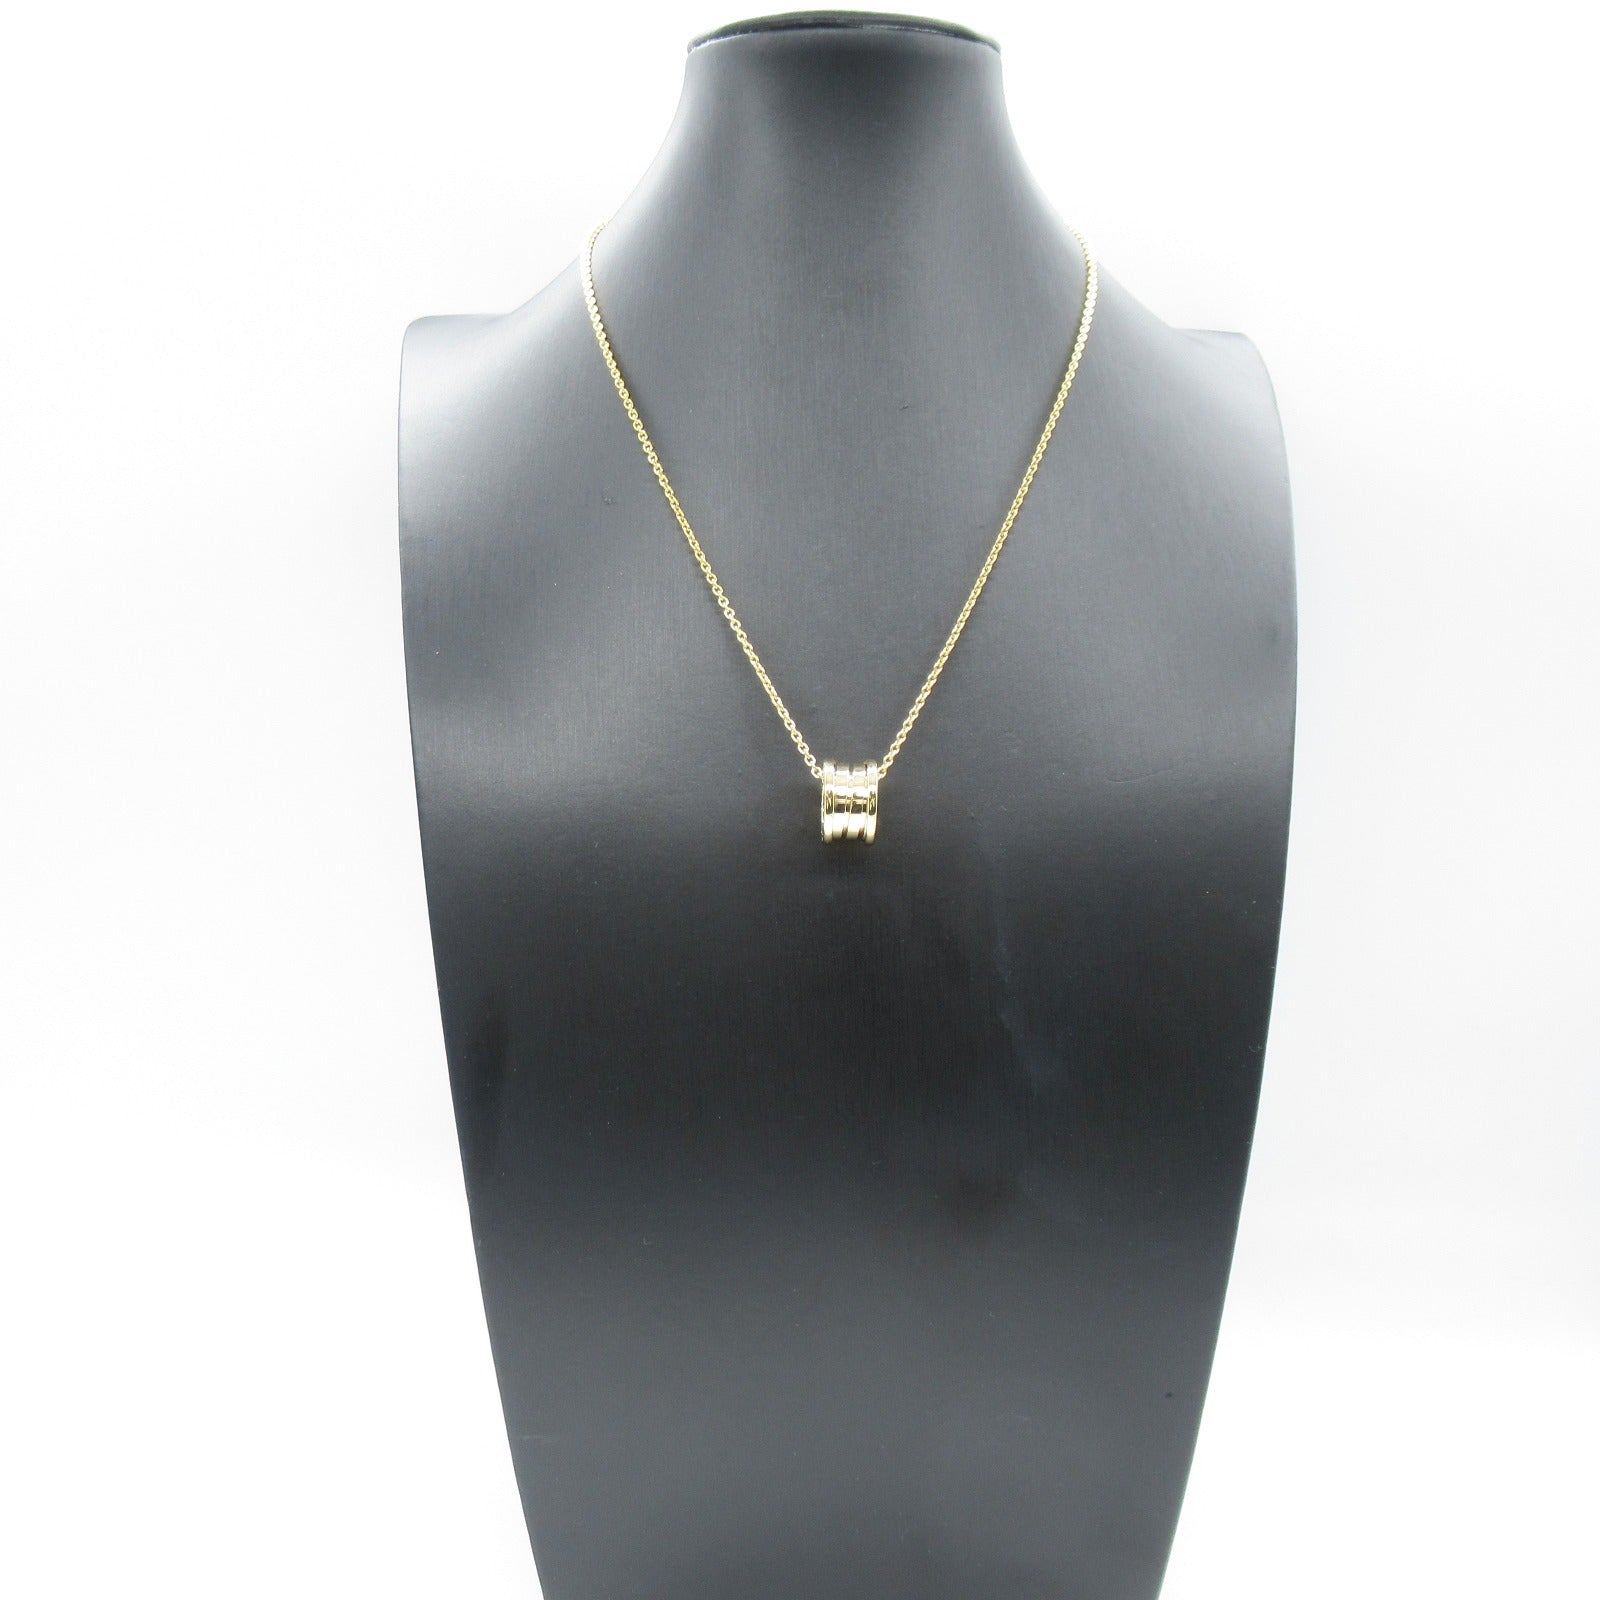 Bulgari BVLGARI B-zero1 Beezel one necklace necklace jewelry K18 (yellow g)  G  【semi-antique】 N